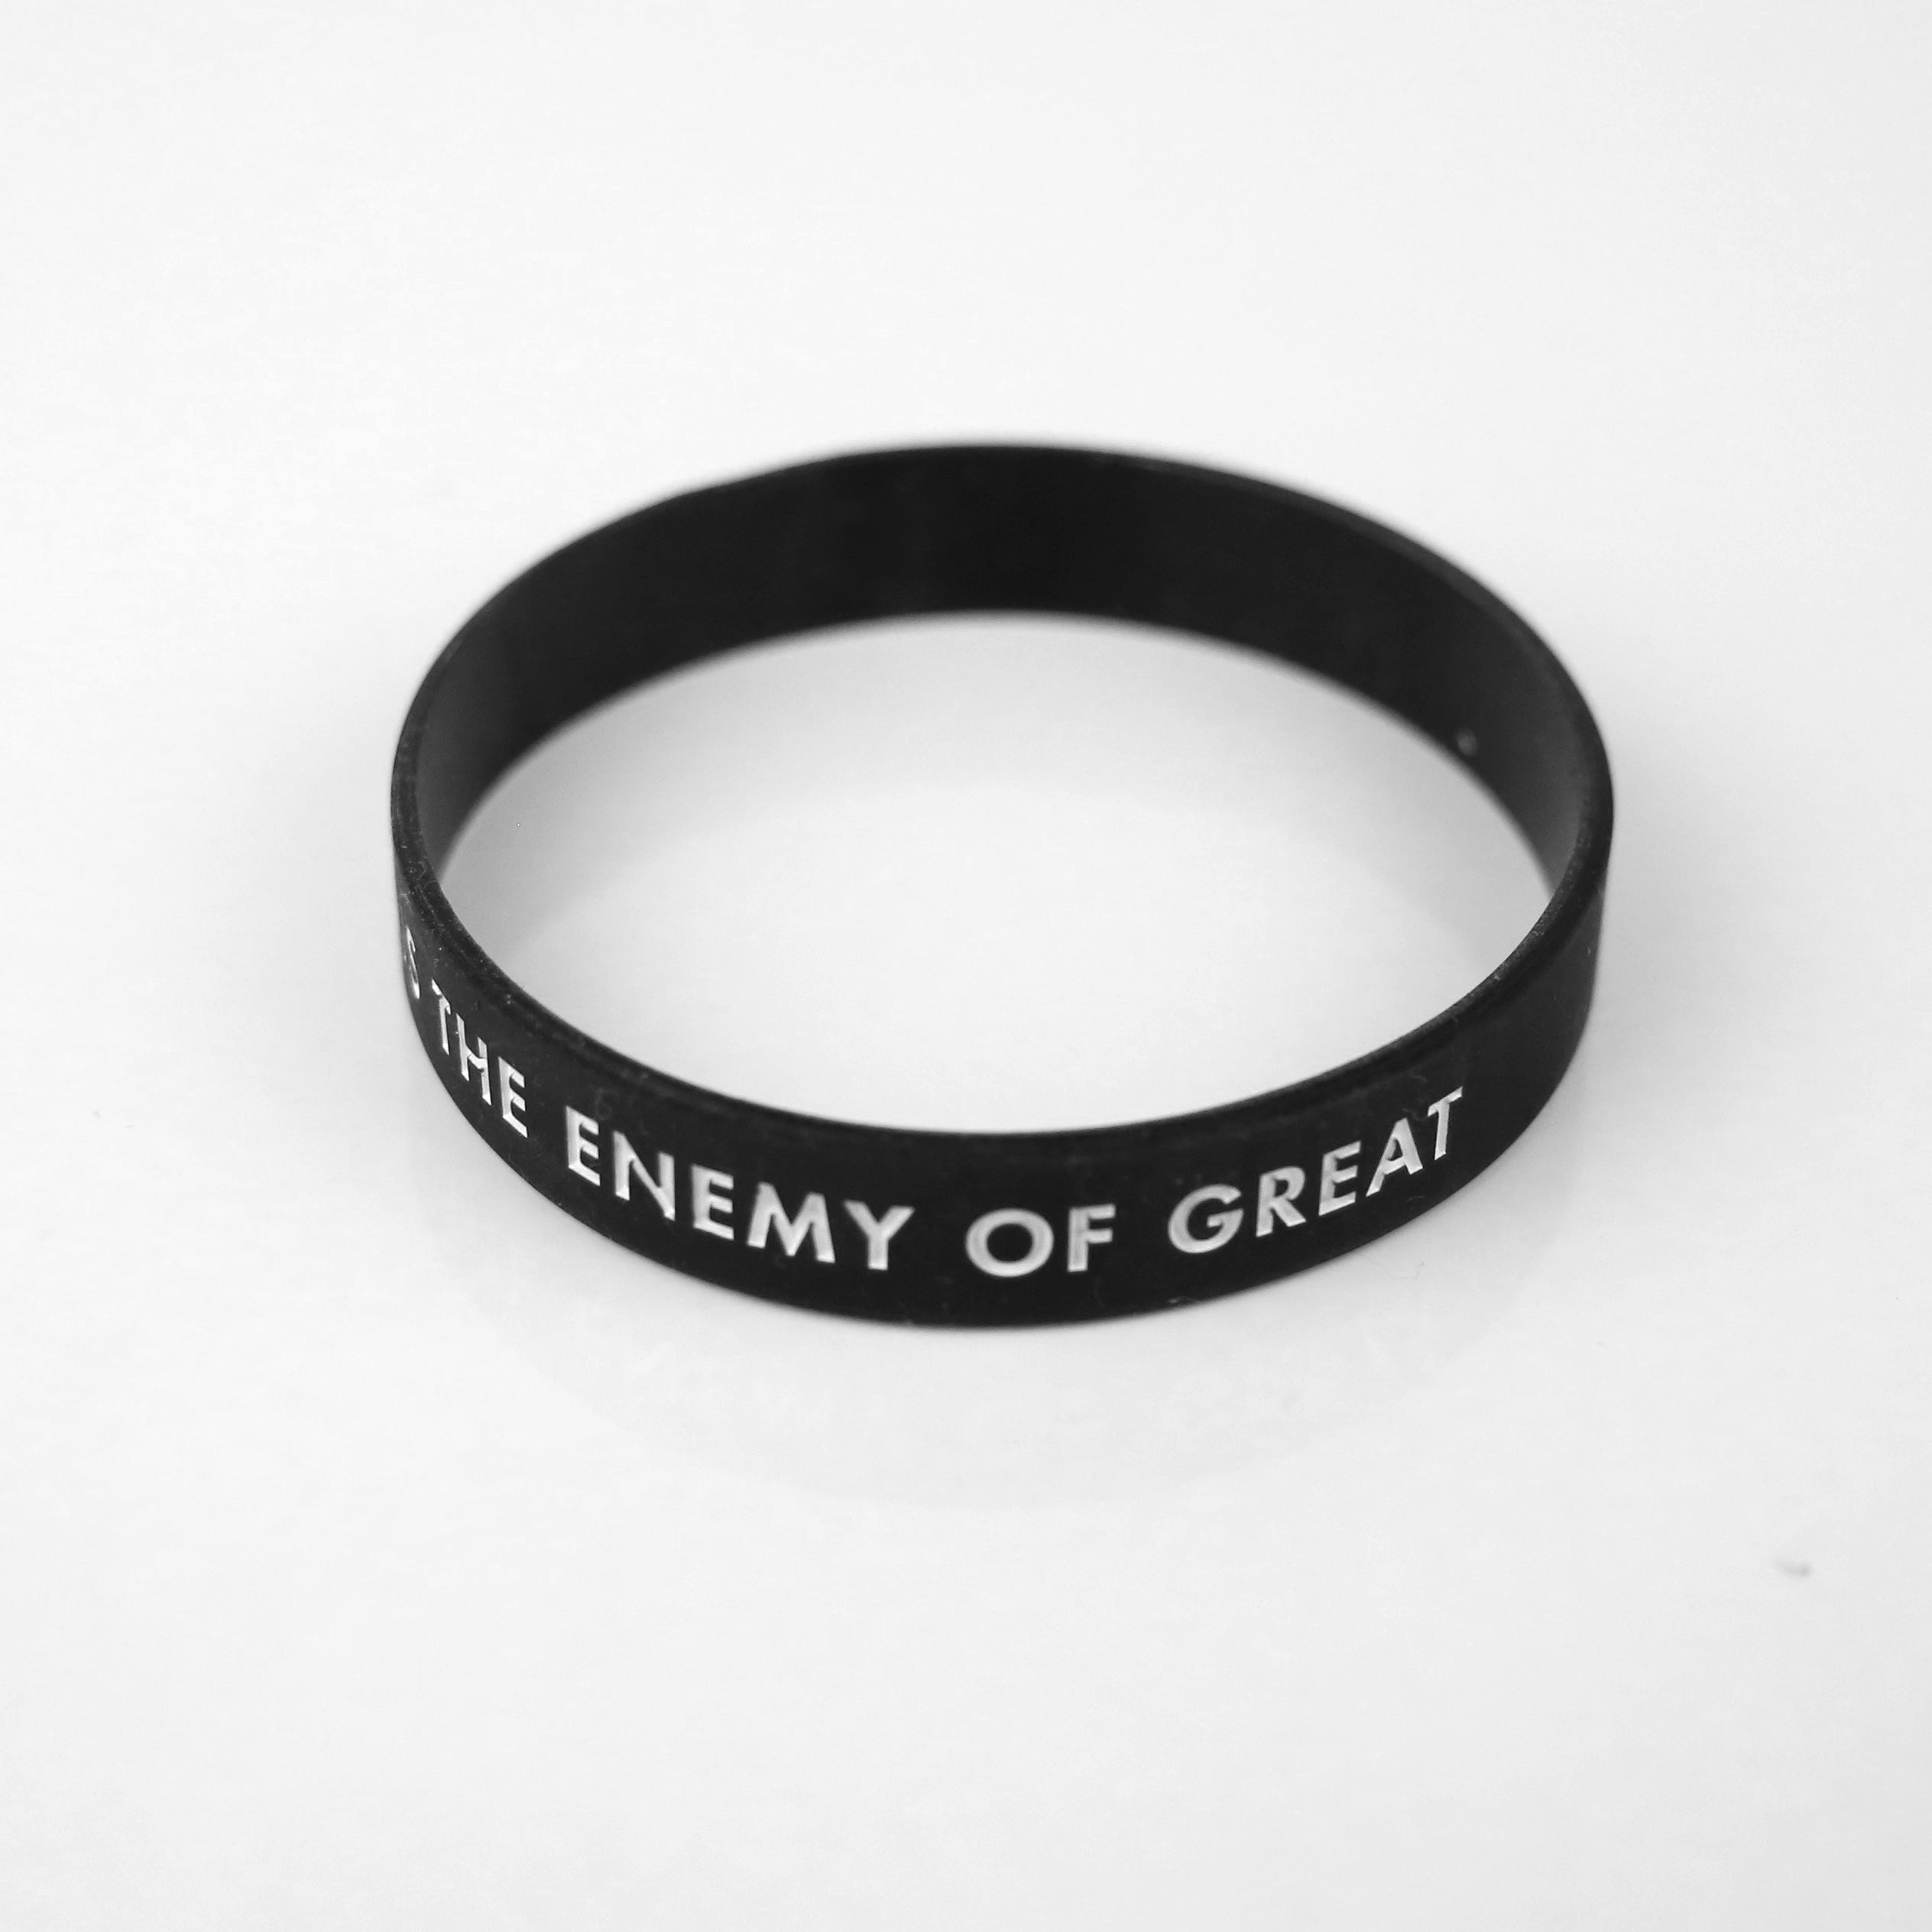 Good is the Enemy of Great Bracelet